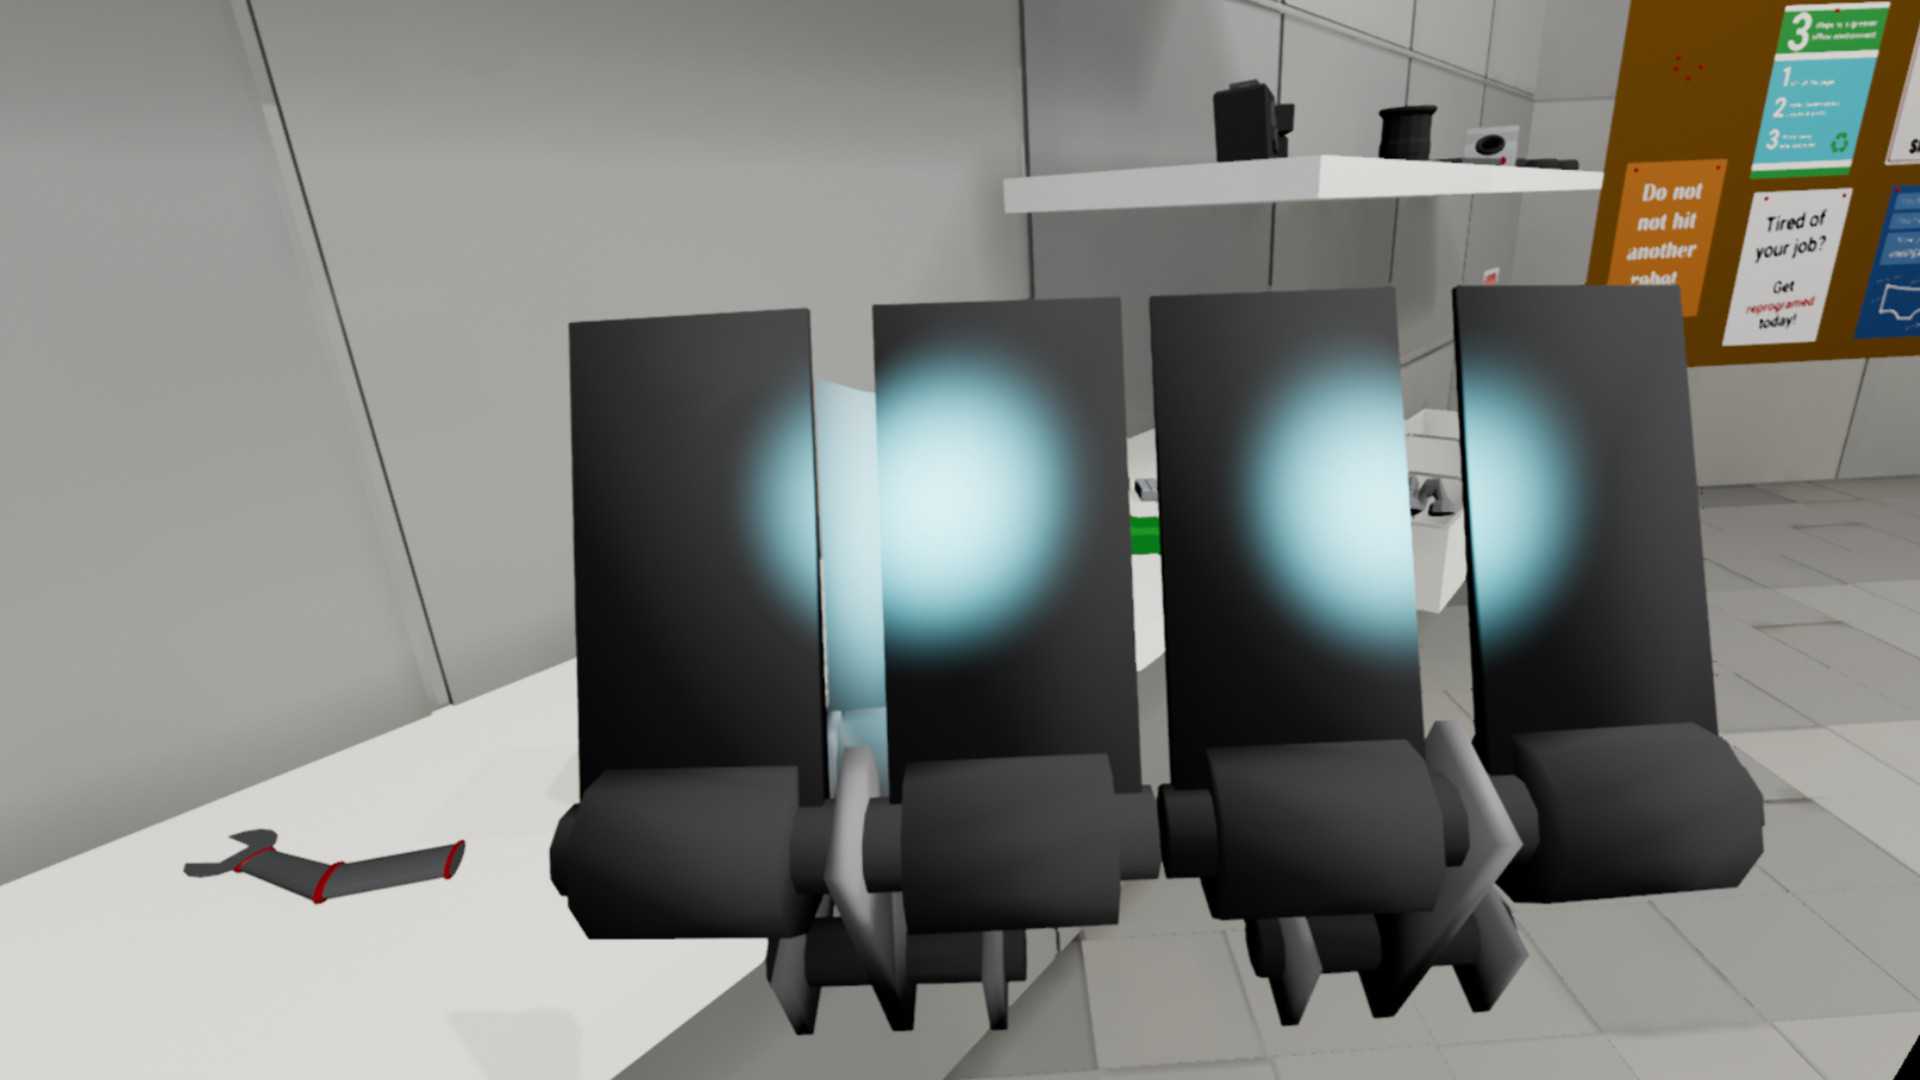 Conveyor VR